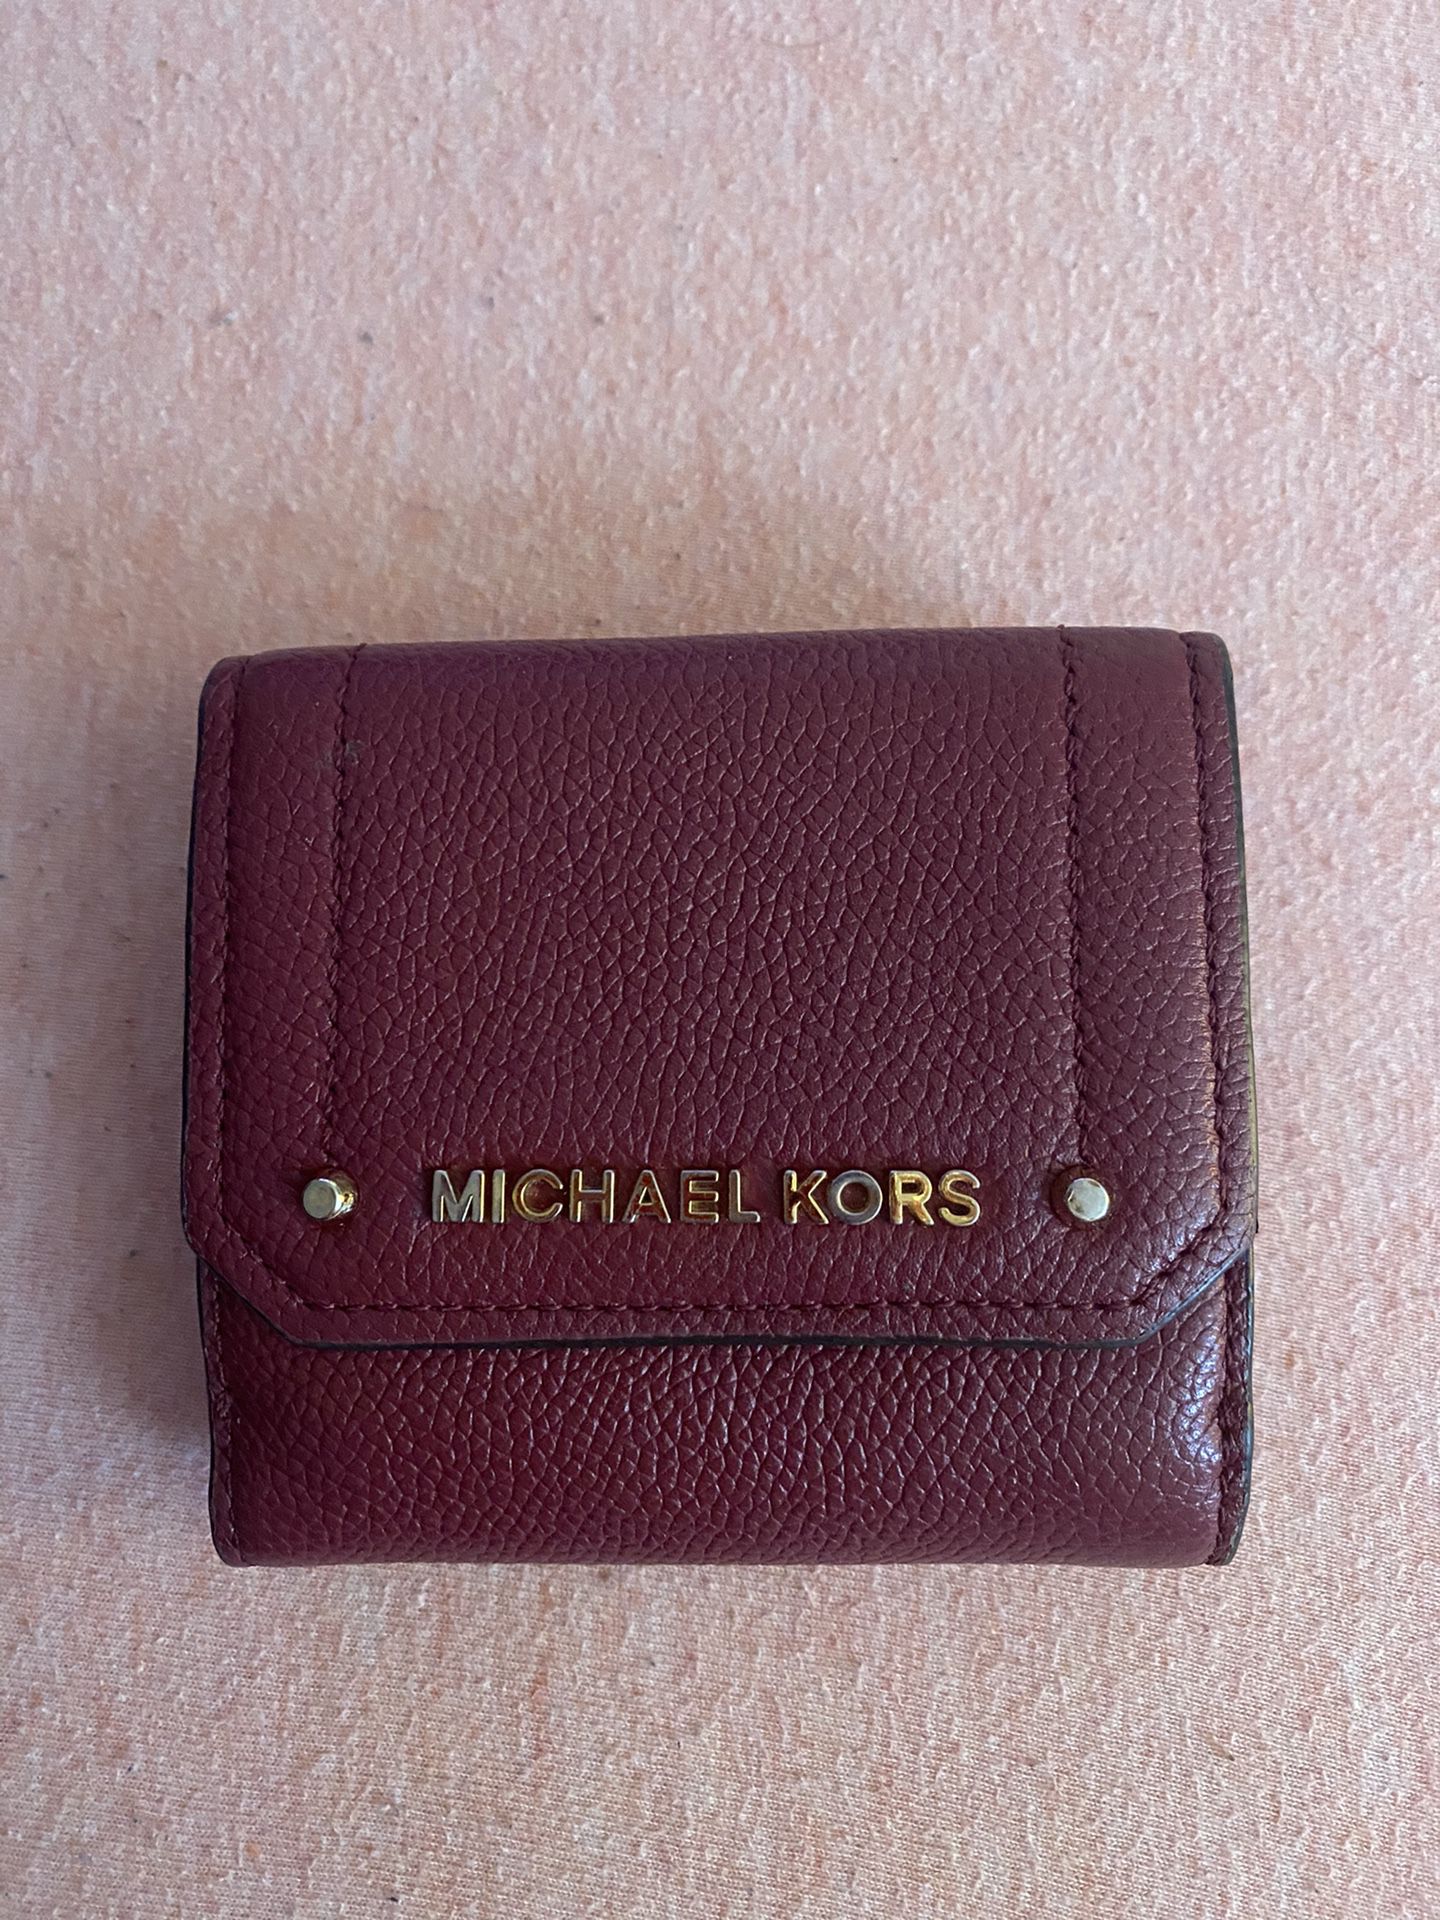 Michael Kors tri-fold wallet